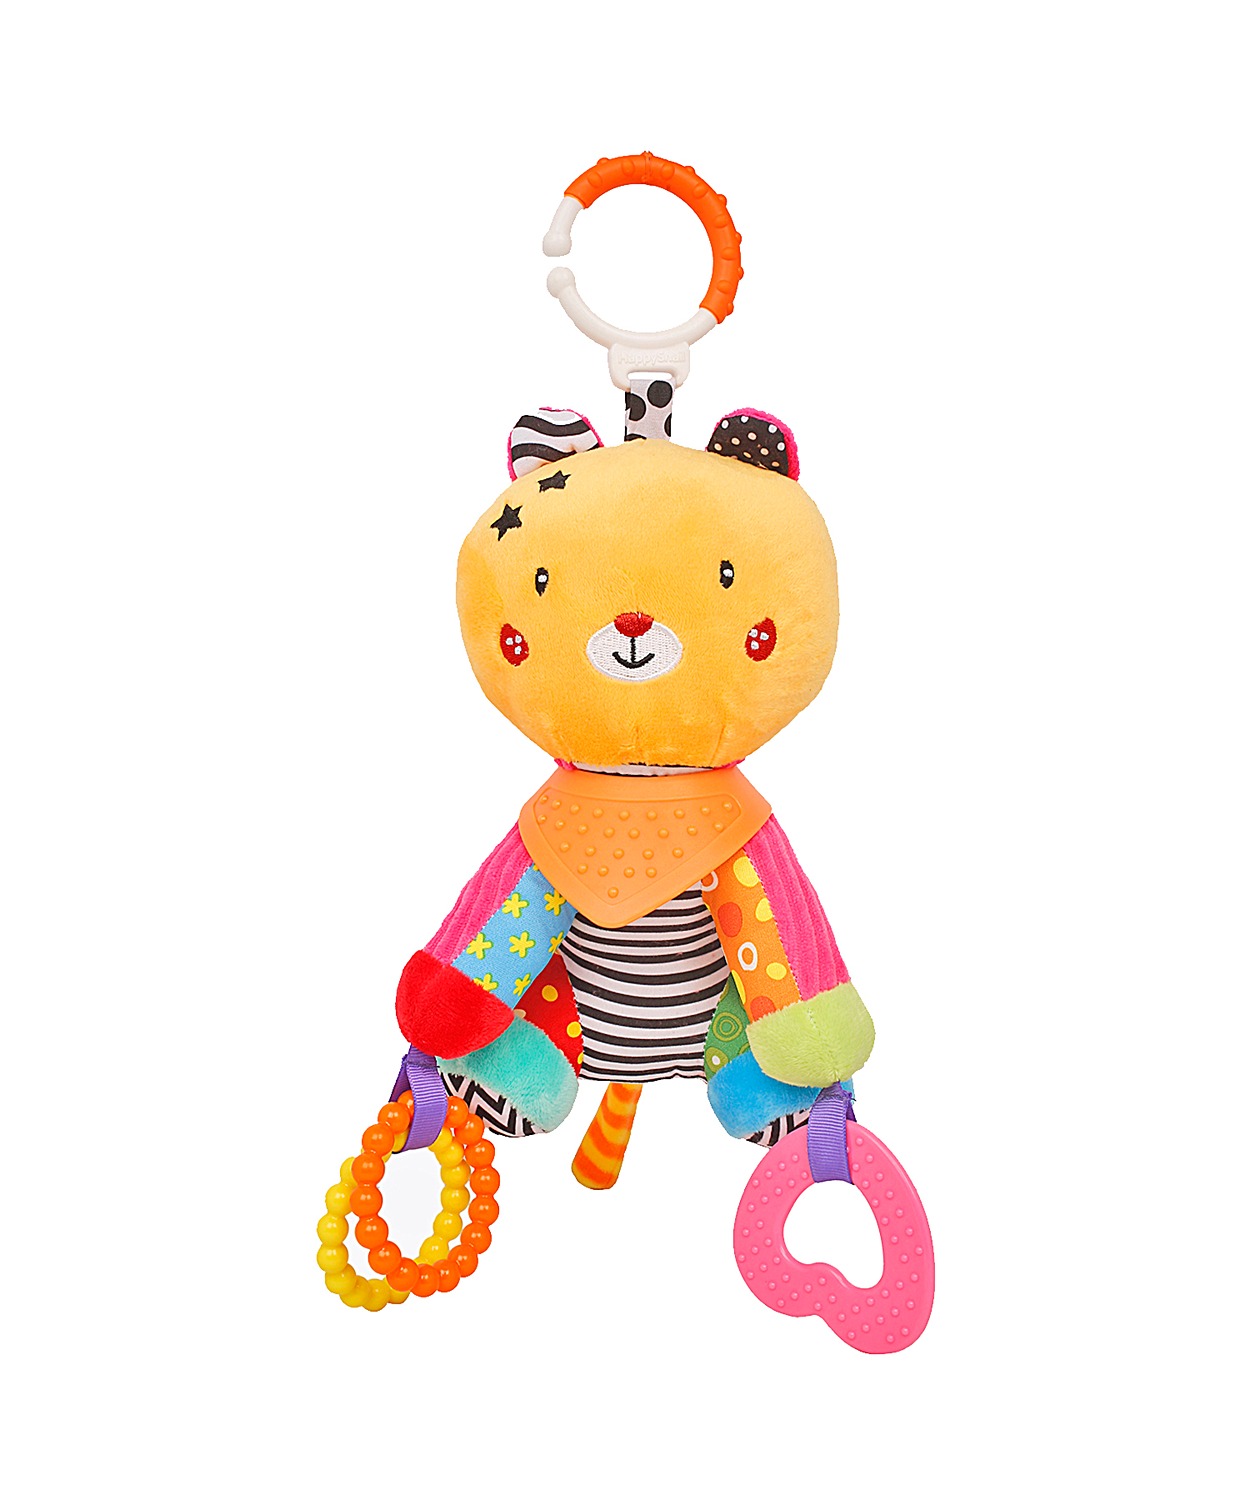 Smiling Star Orange Premium Hanging Toy With Teether